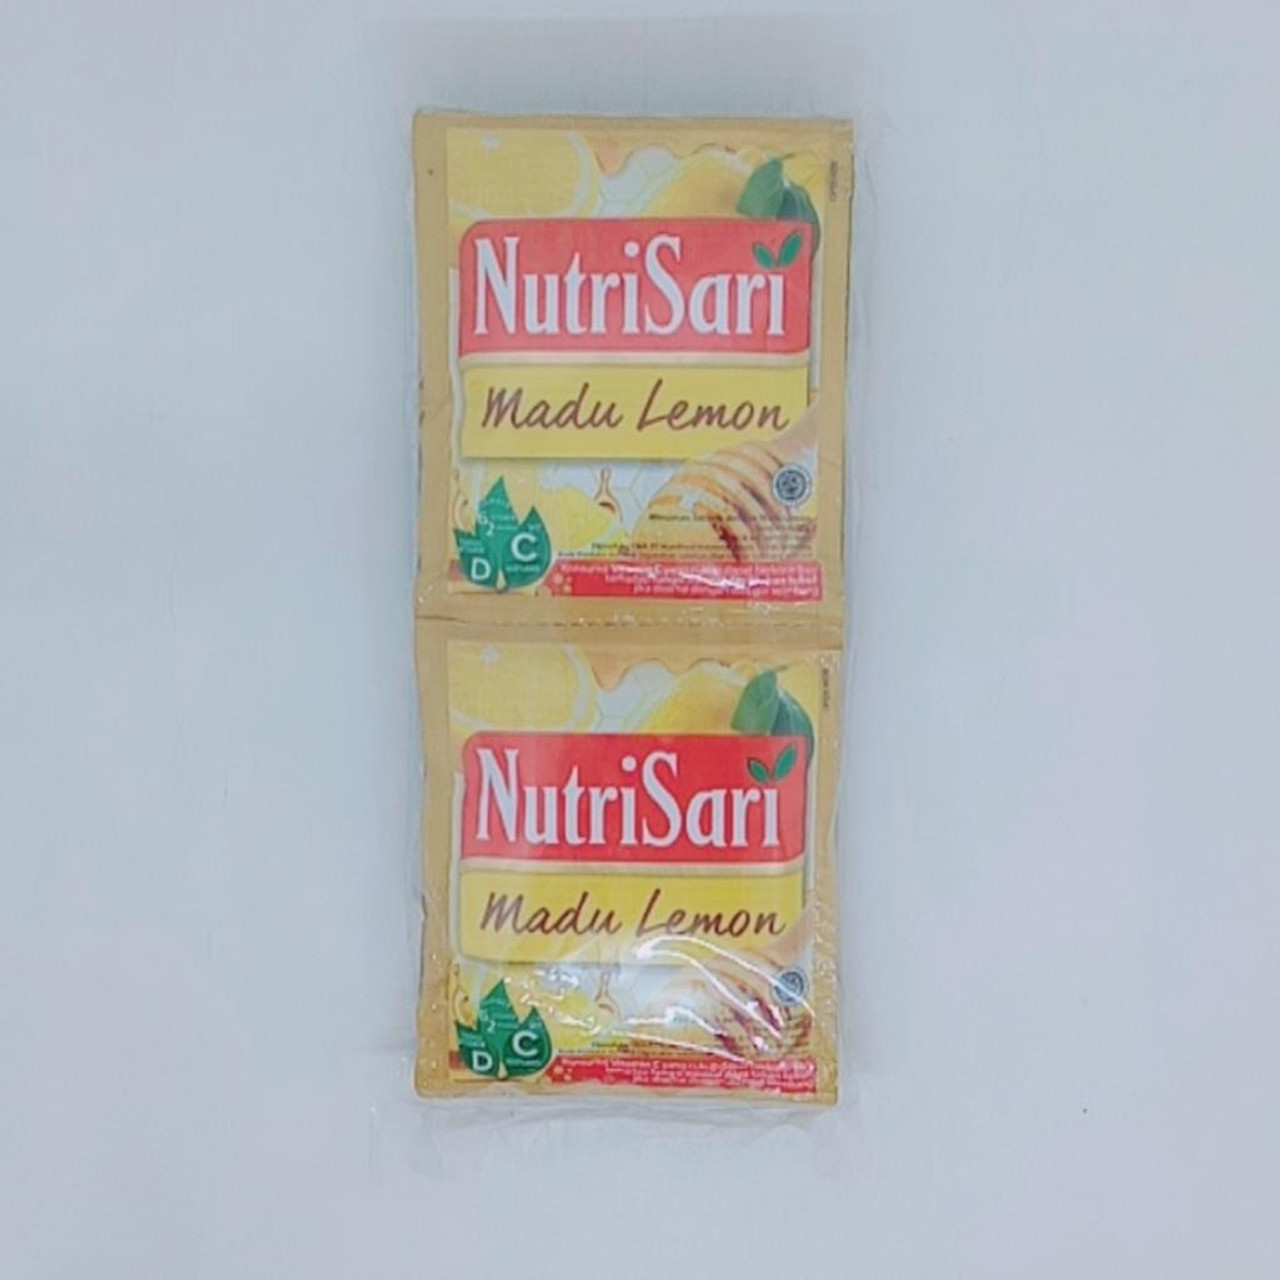 NutriSari Madu Lemon, 10ct